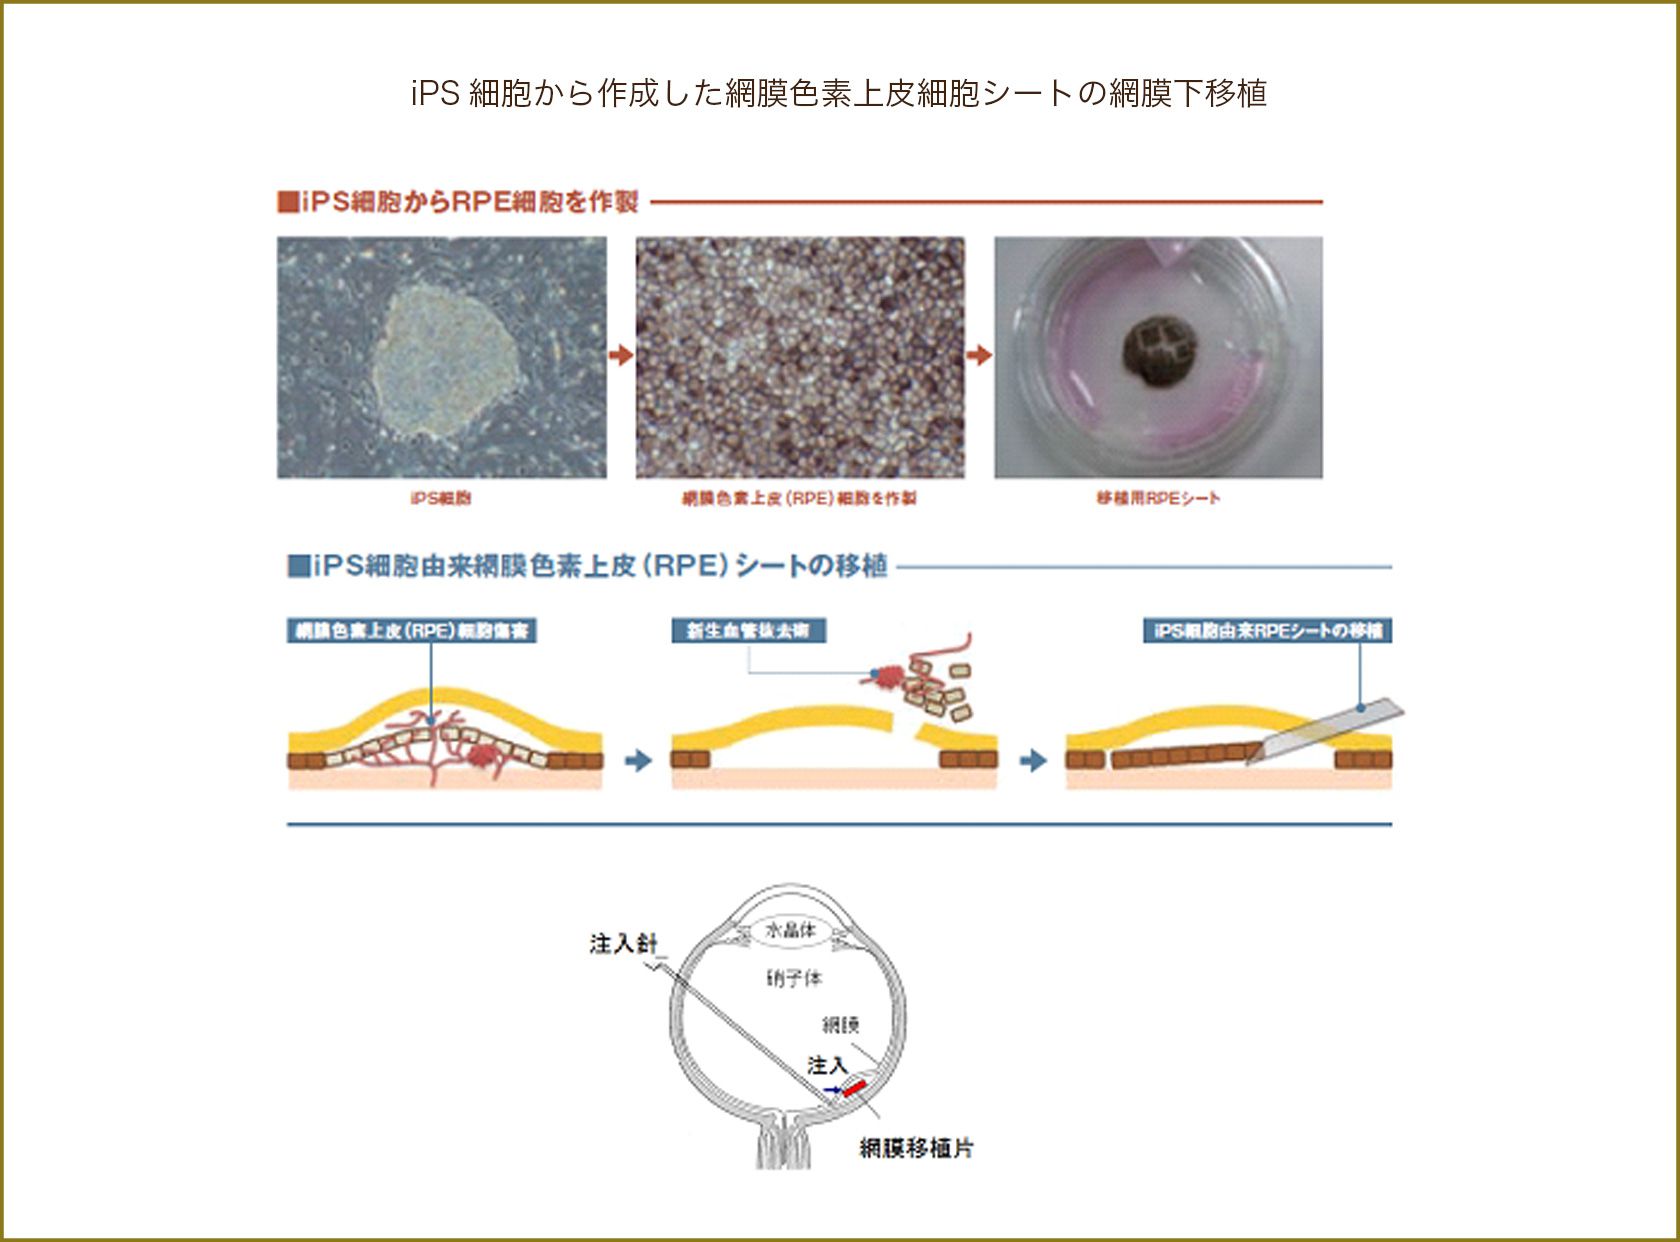 iPS細胞から作成した網膜色素上皮細胞シートの網膜下移植